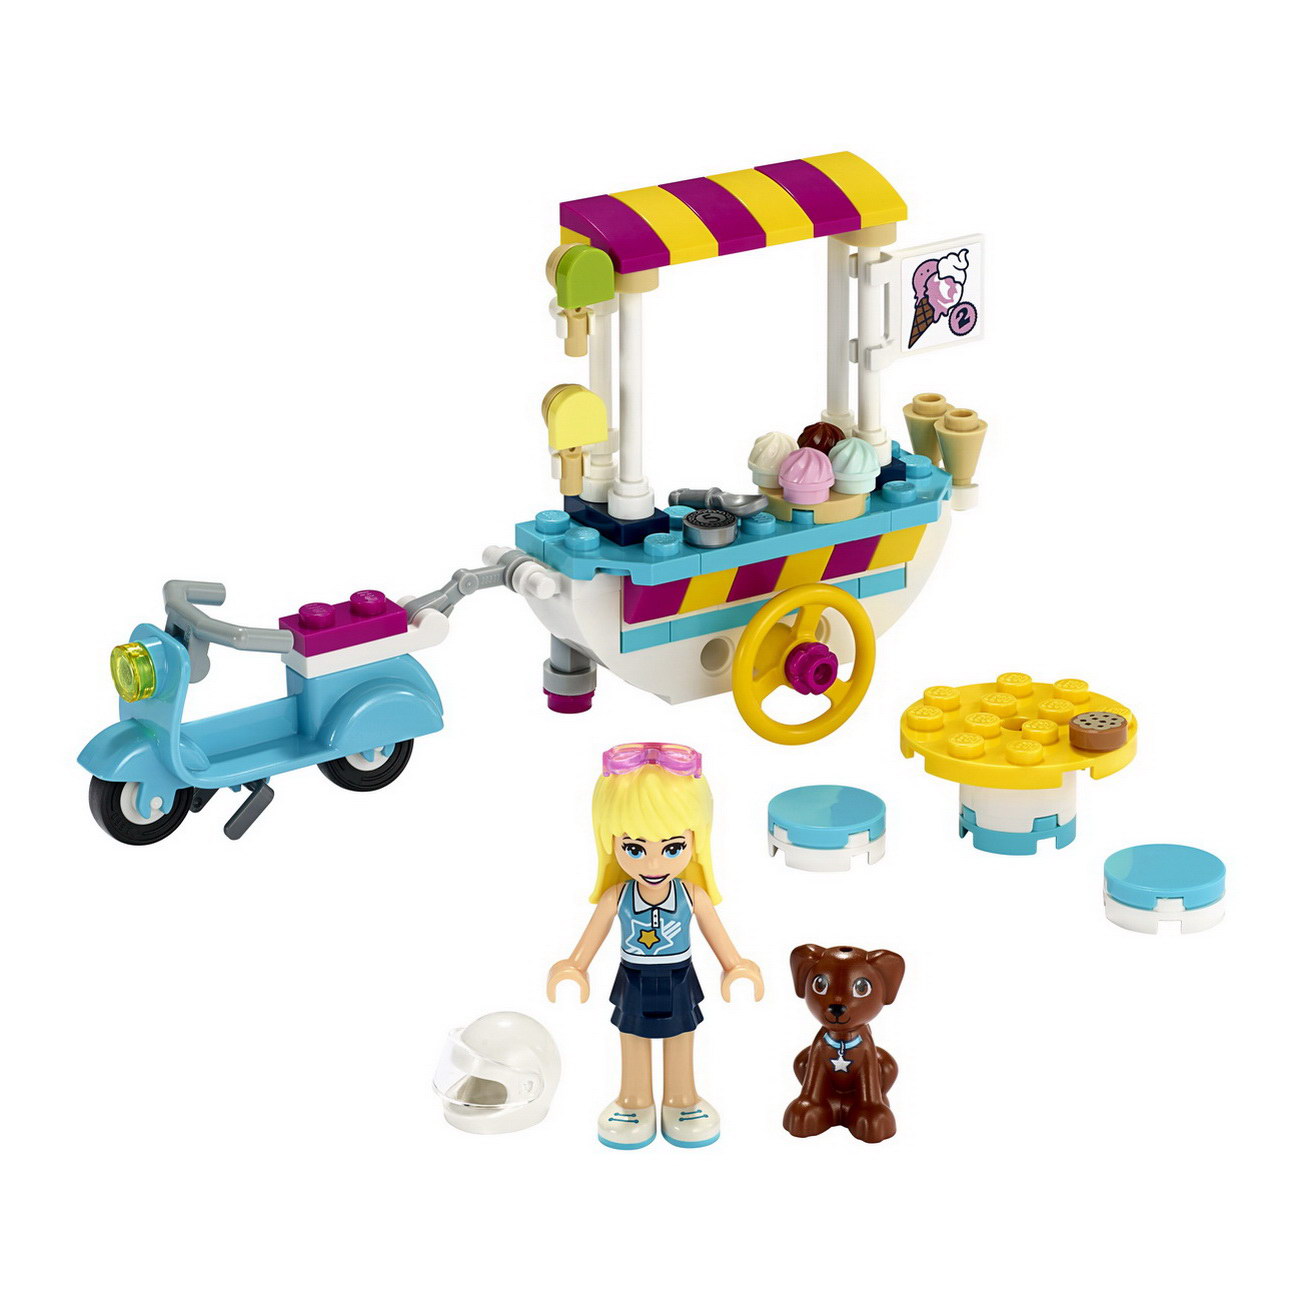 LEGO Friends - Stephanies mobiler Eiswagen (41389)